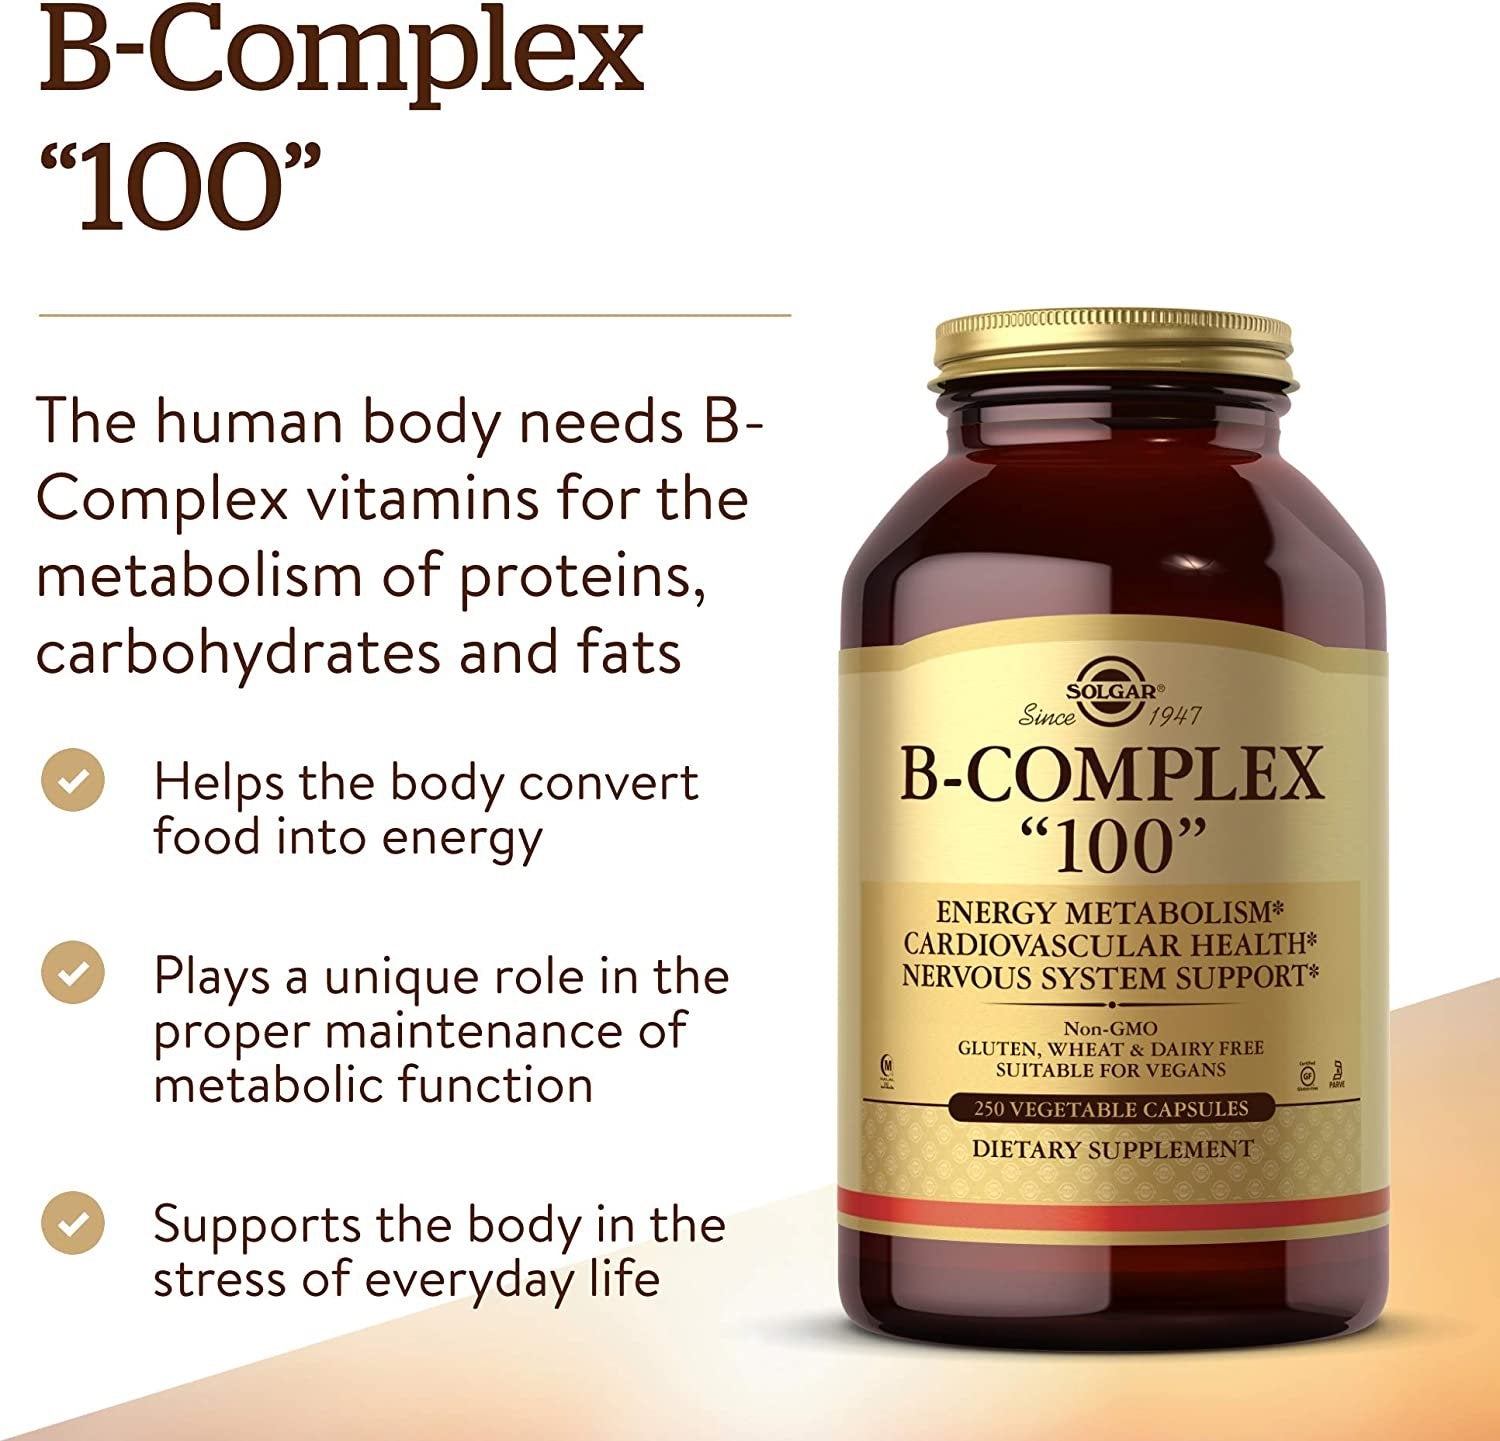 Solgar B-Complex "100" - Heart, Nervous System, Energy Metabolism - 250 ct